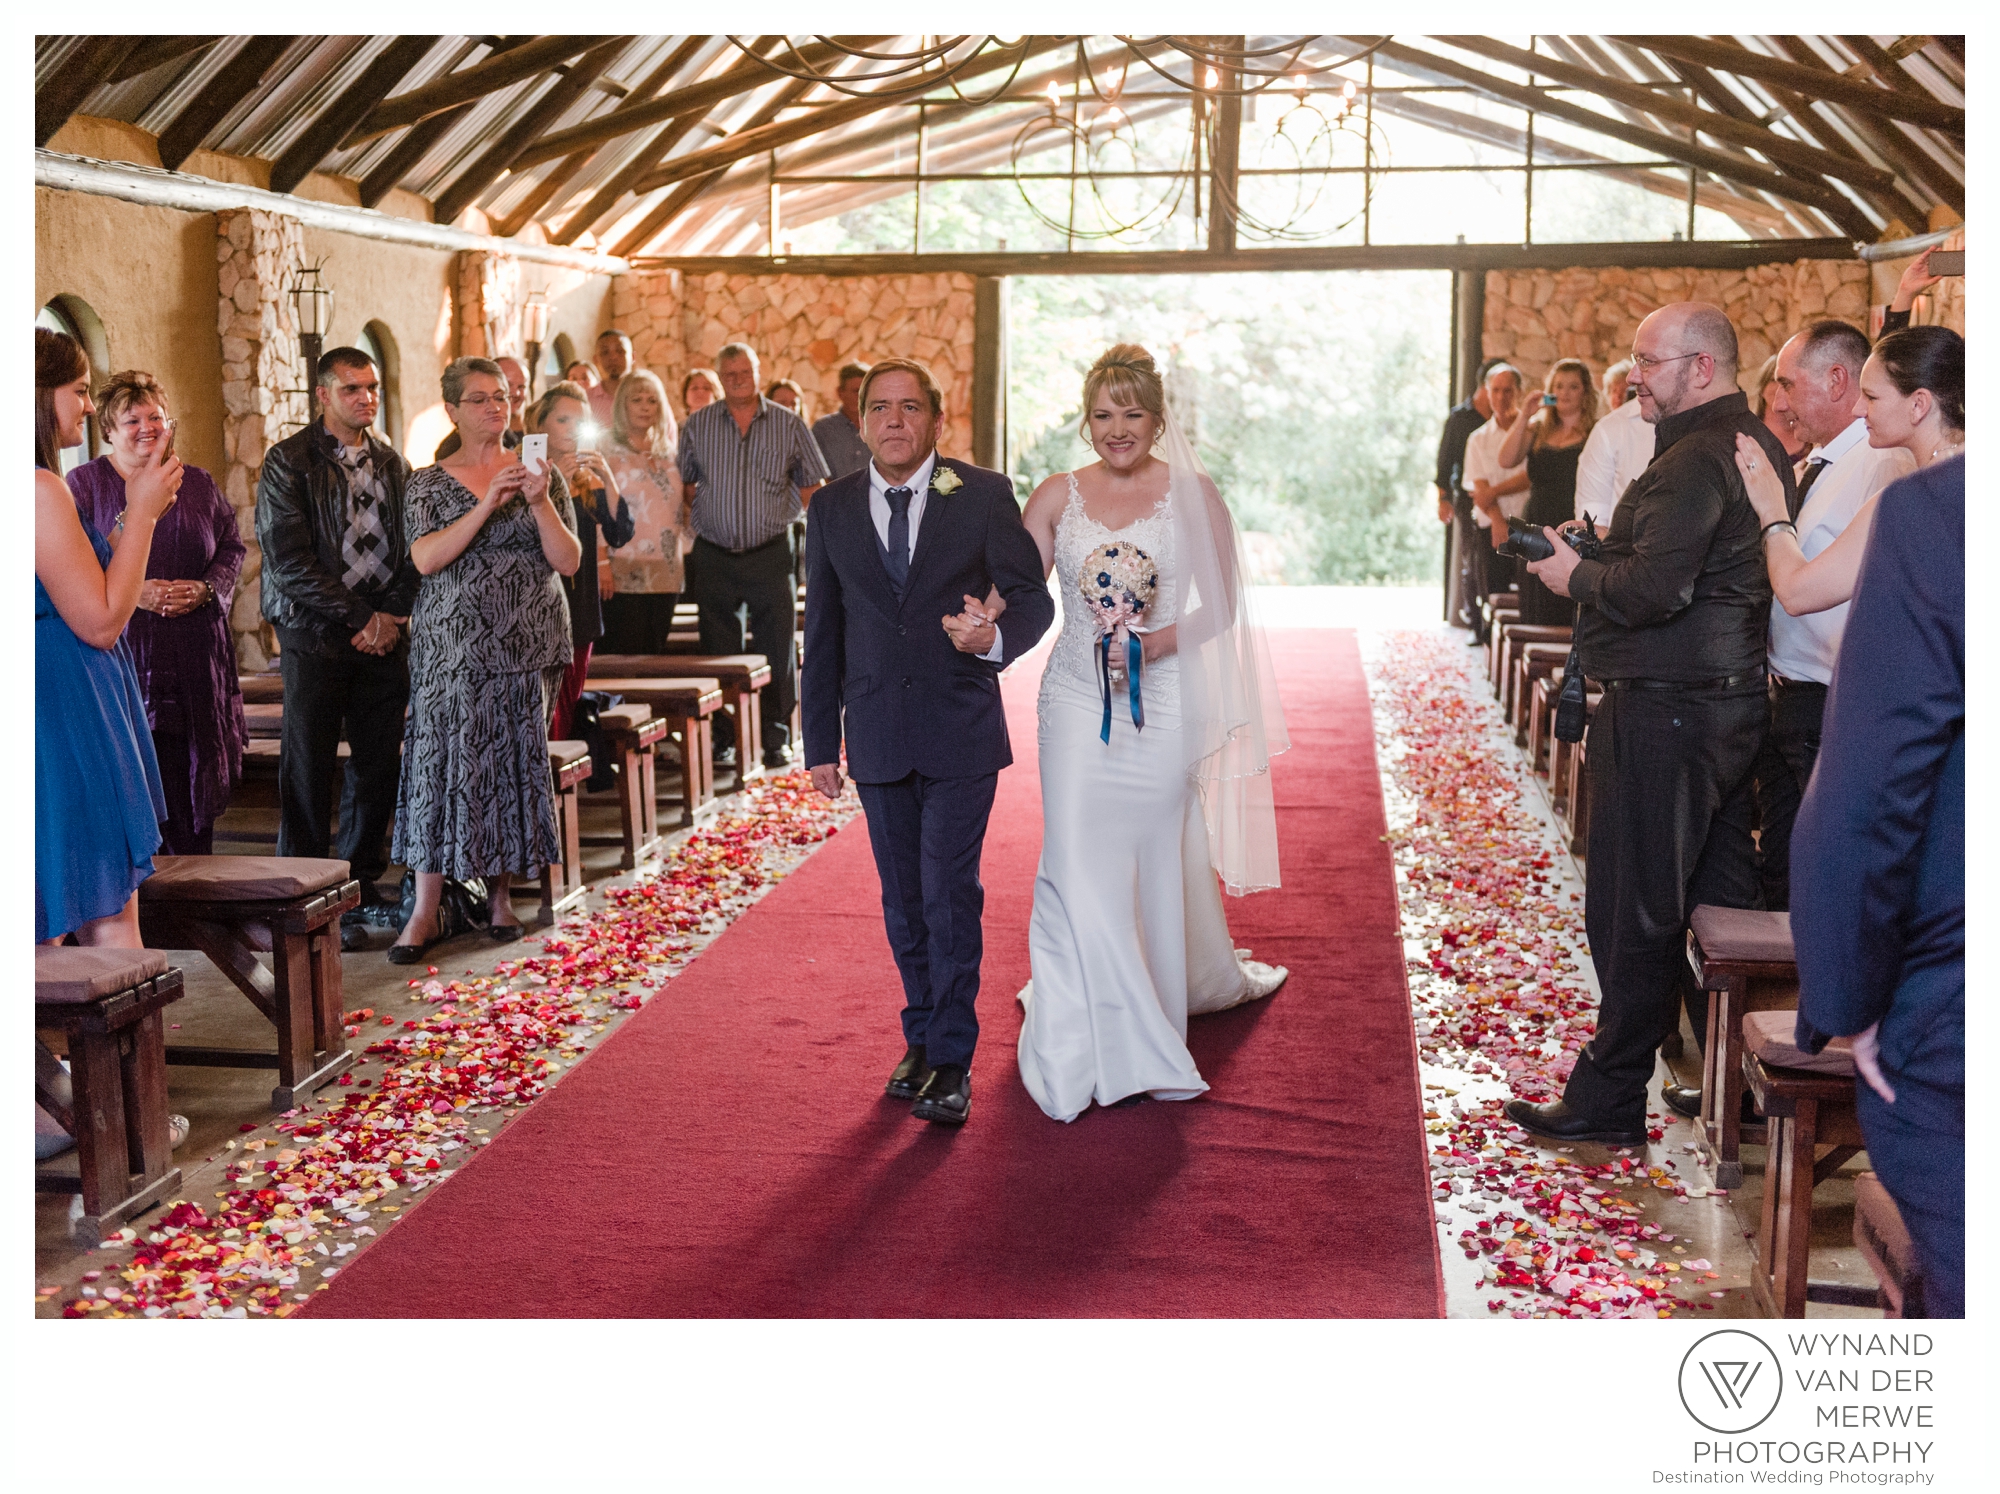 Collin & Cheryl's Wedding Photos